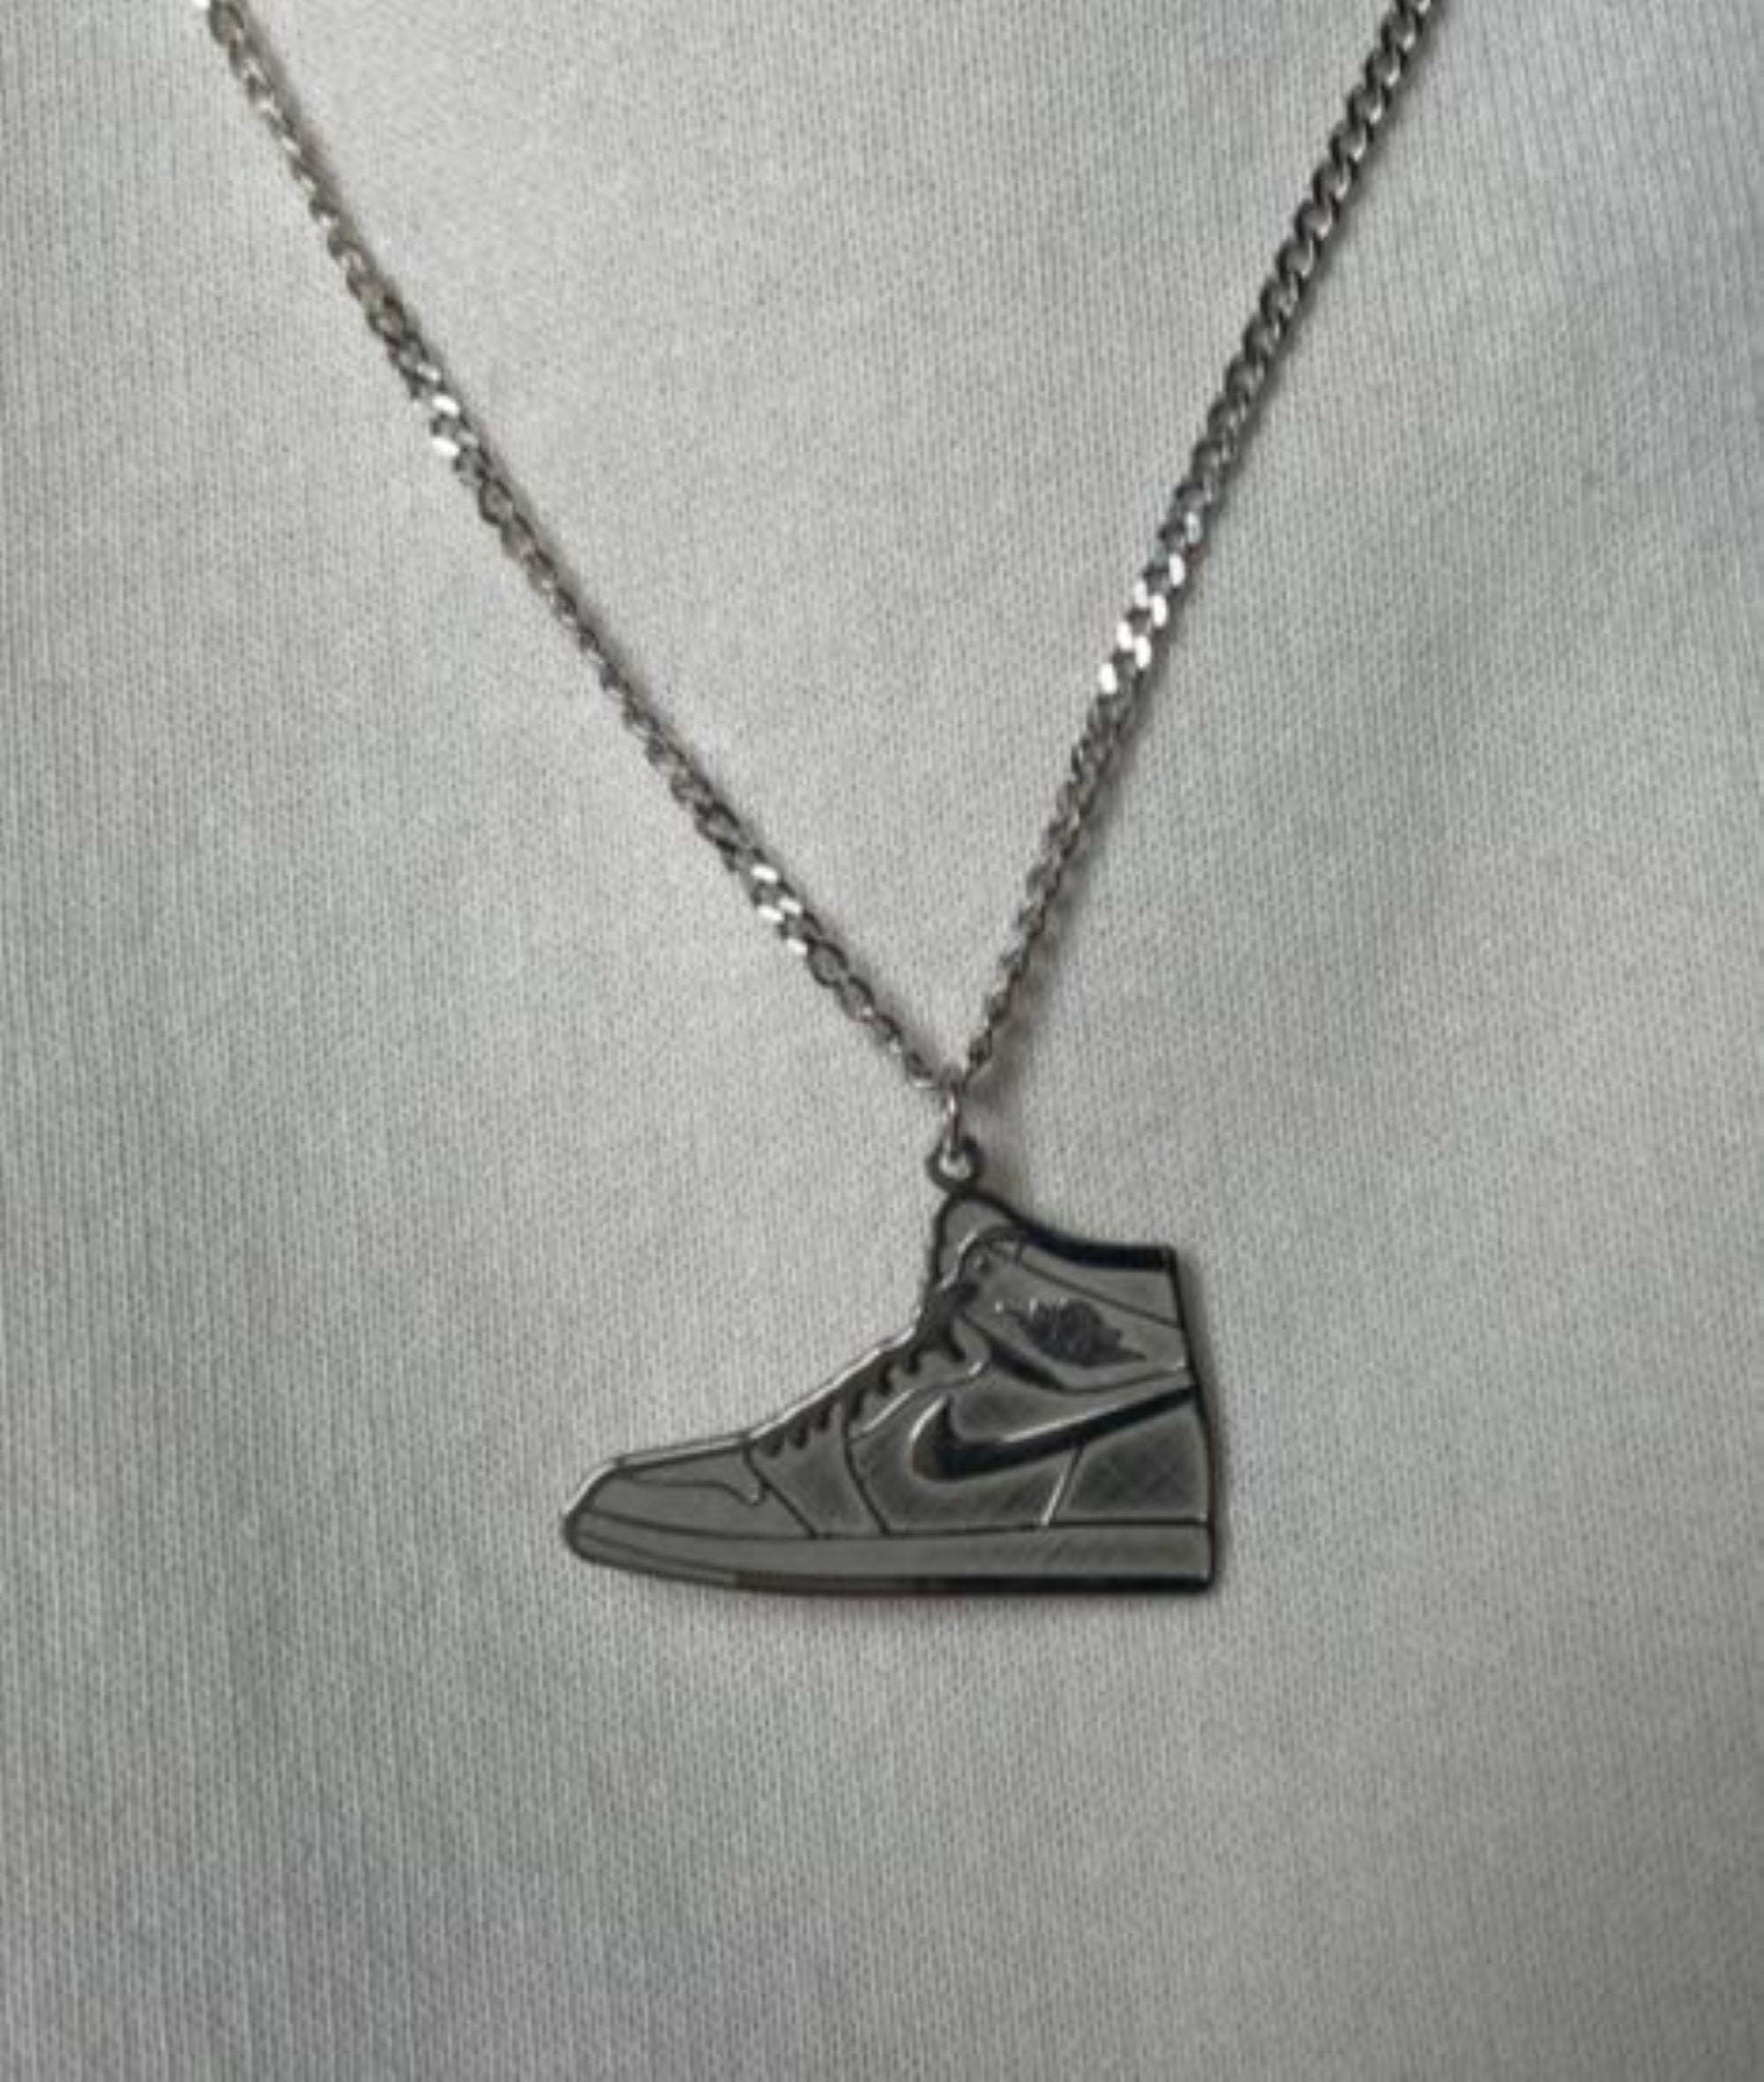 Nike, Jewelry, Vtg Nike Necklace